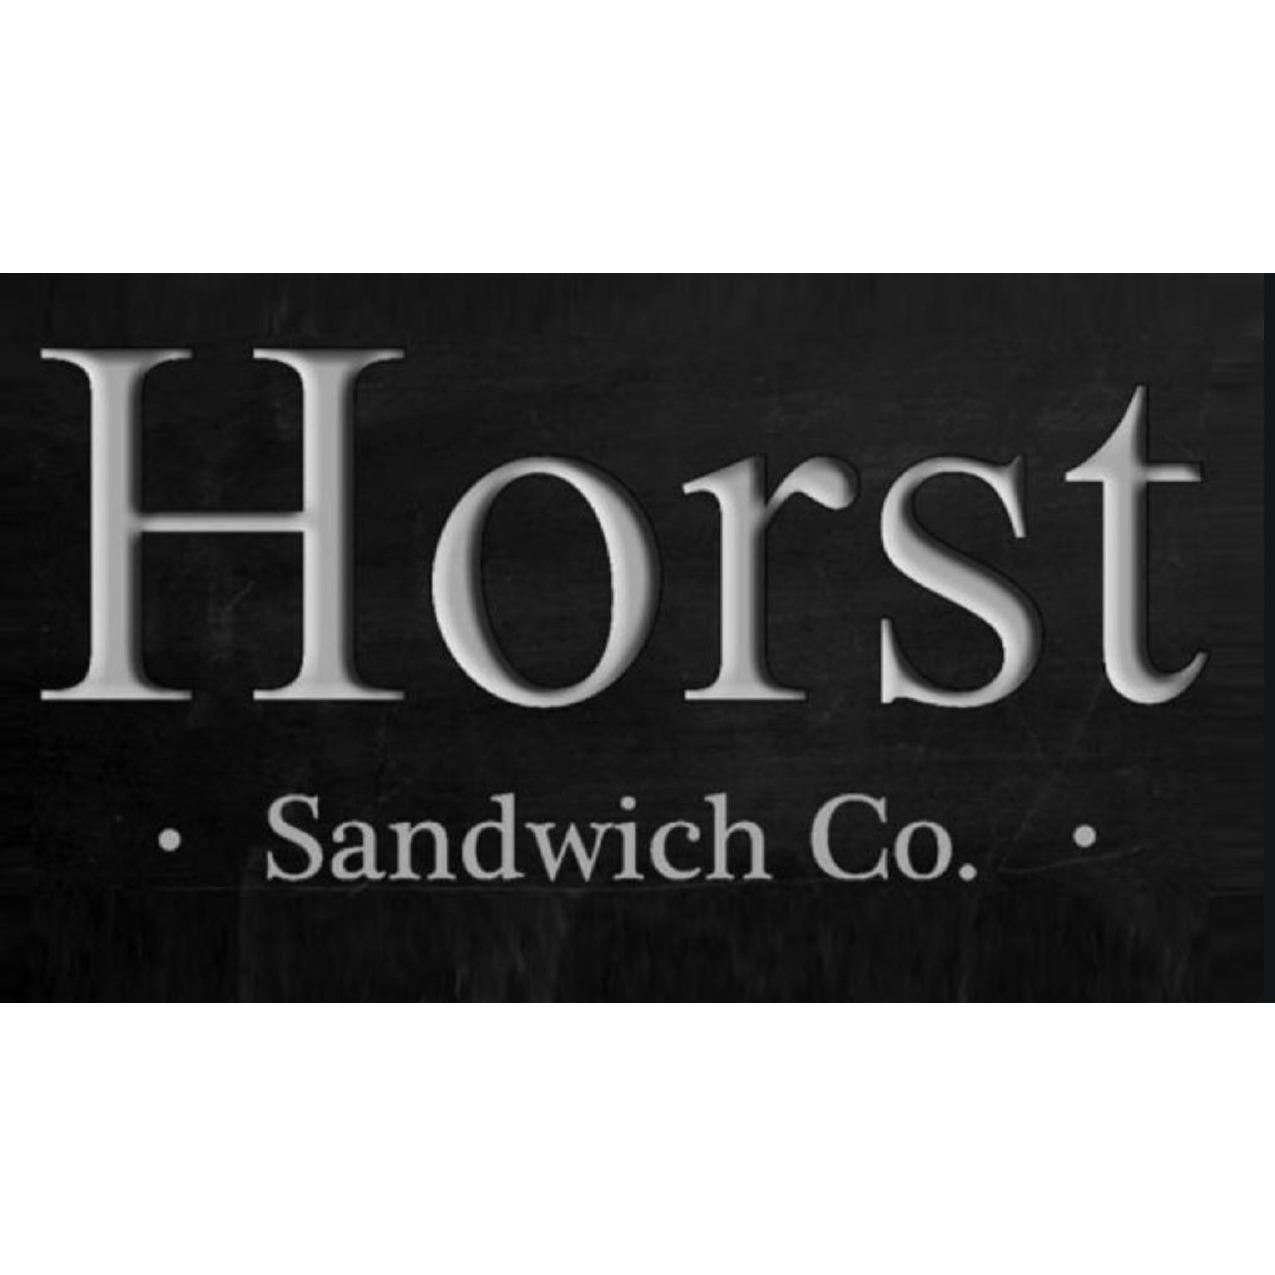 Horst Sandwich Co.